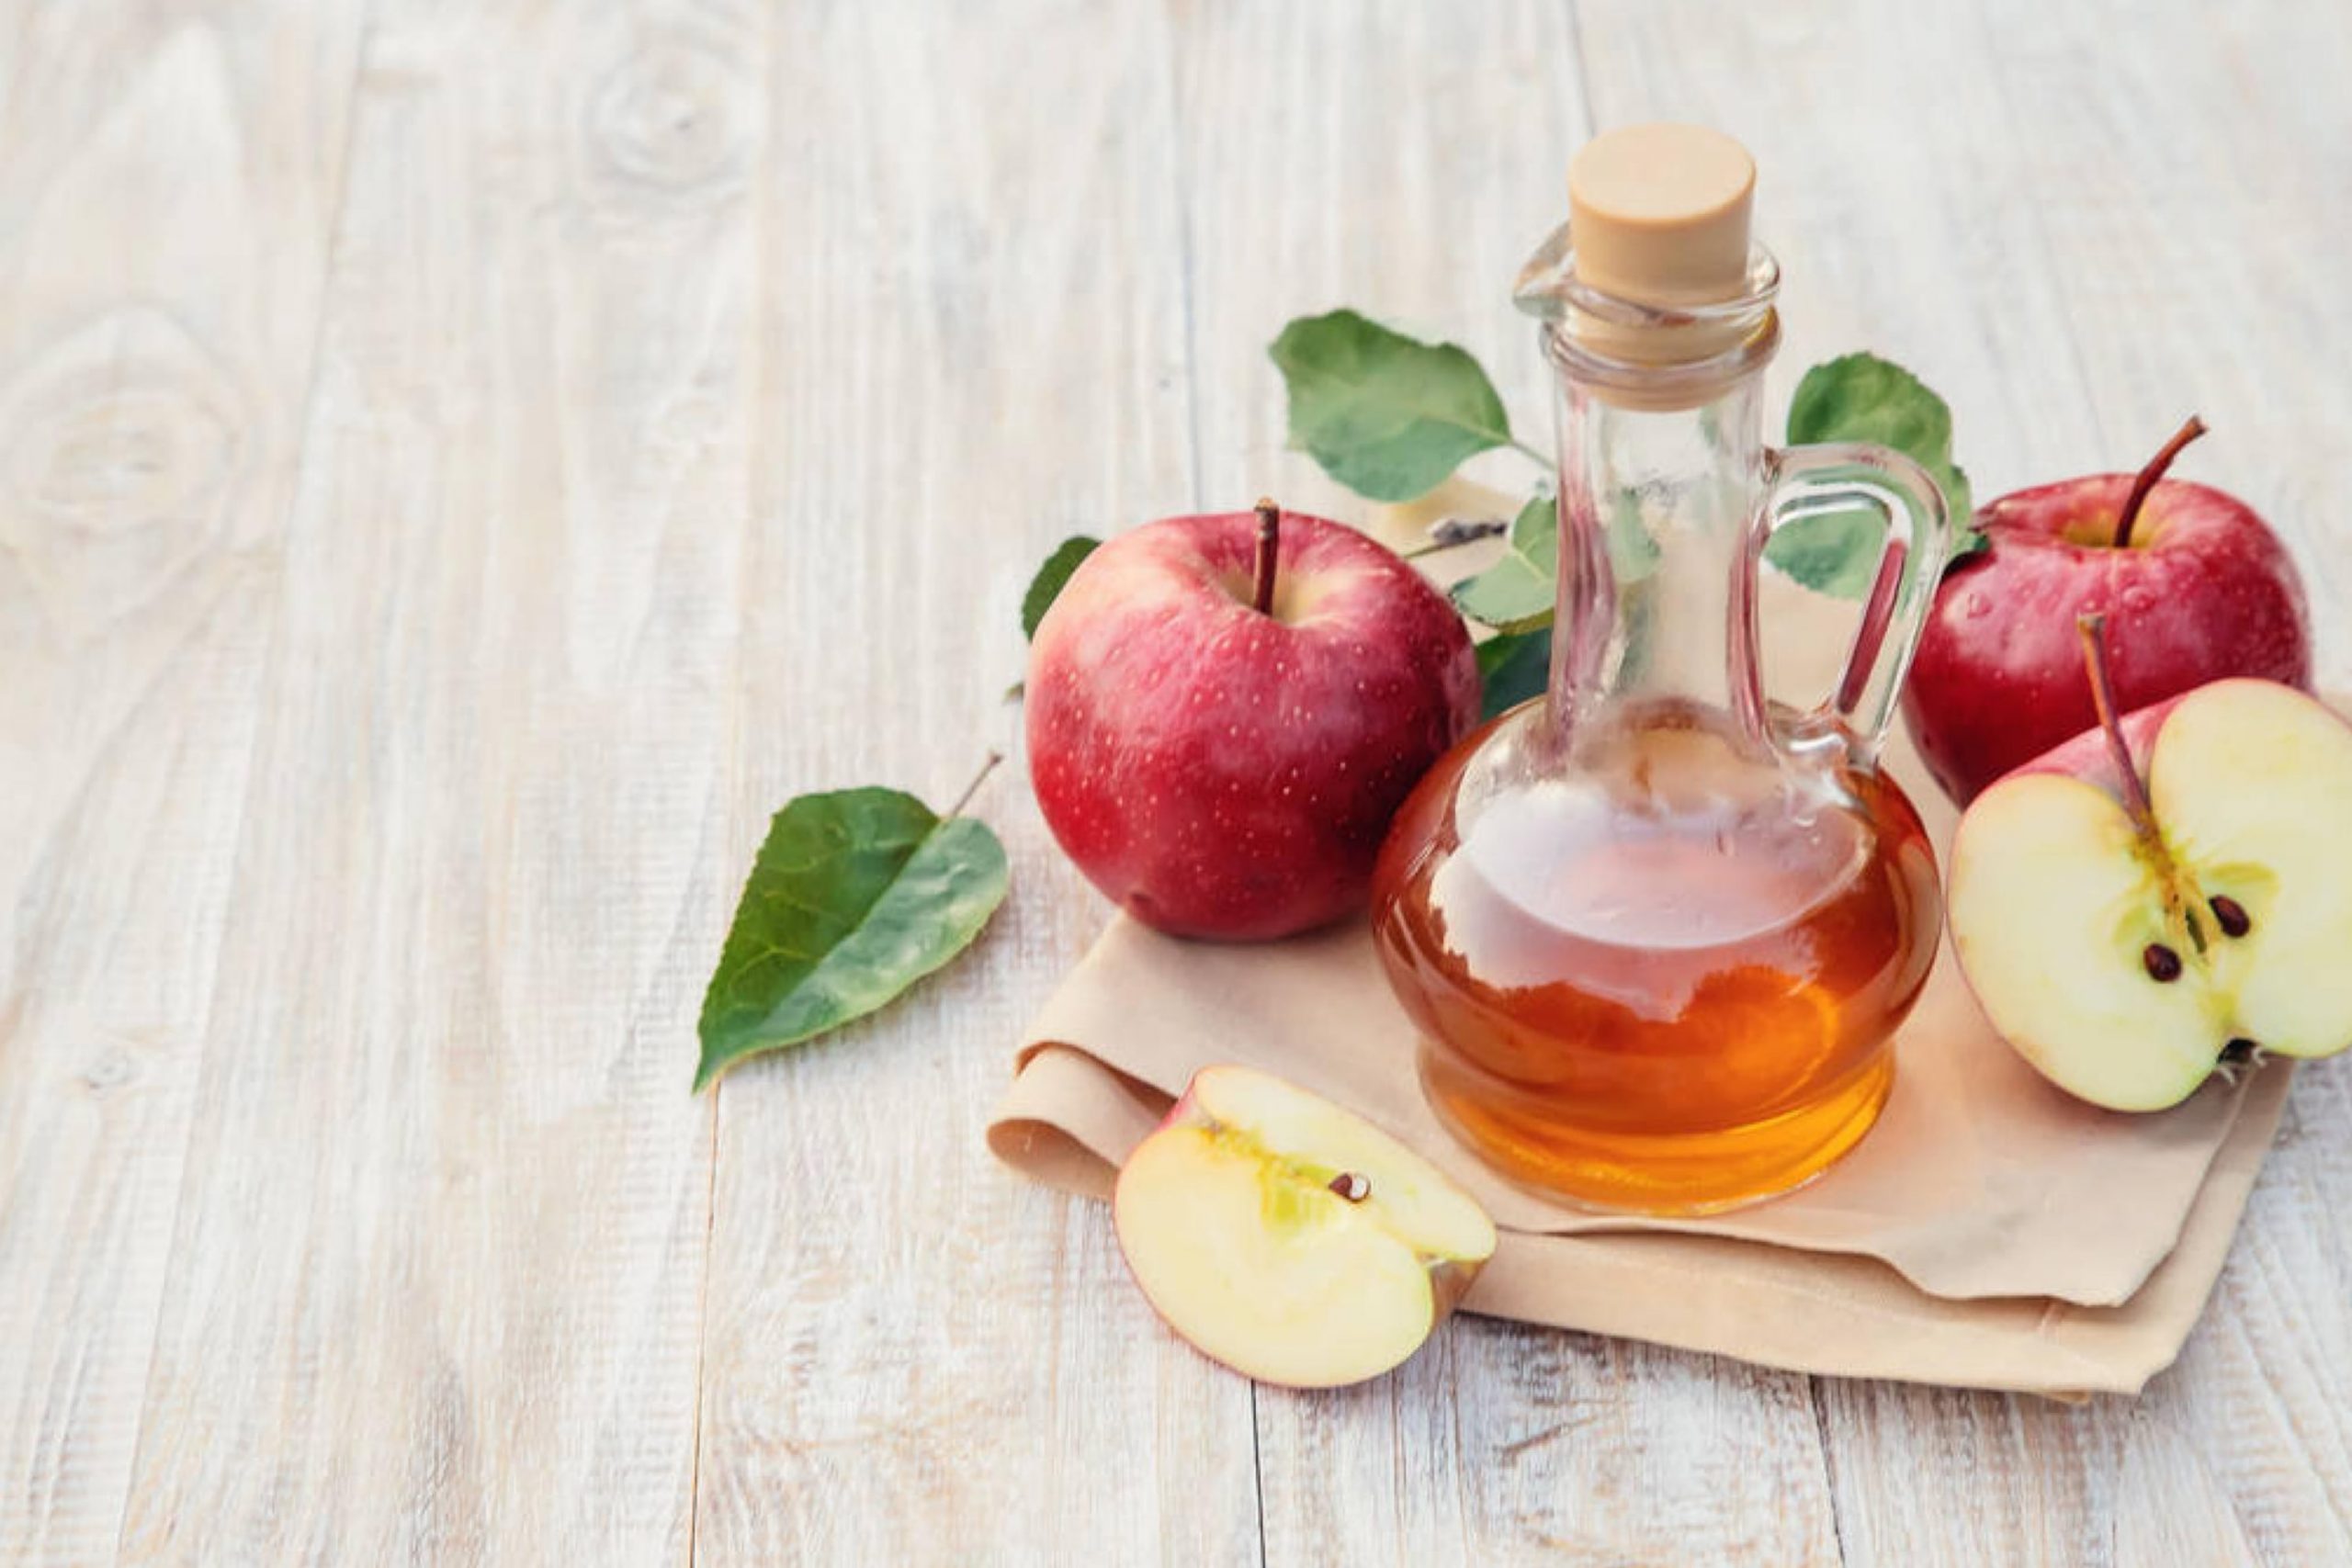 Try an Apple Cider Vinegar Rinse